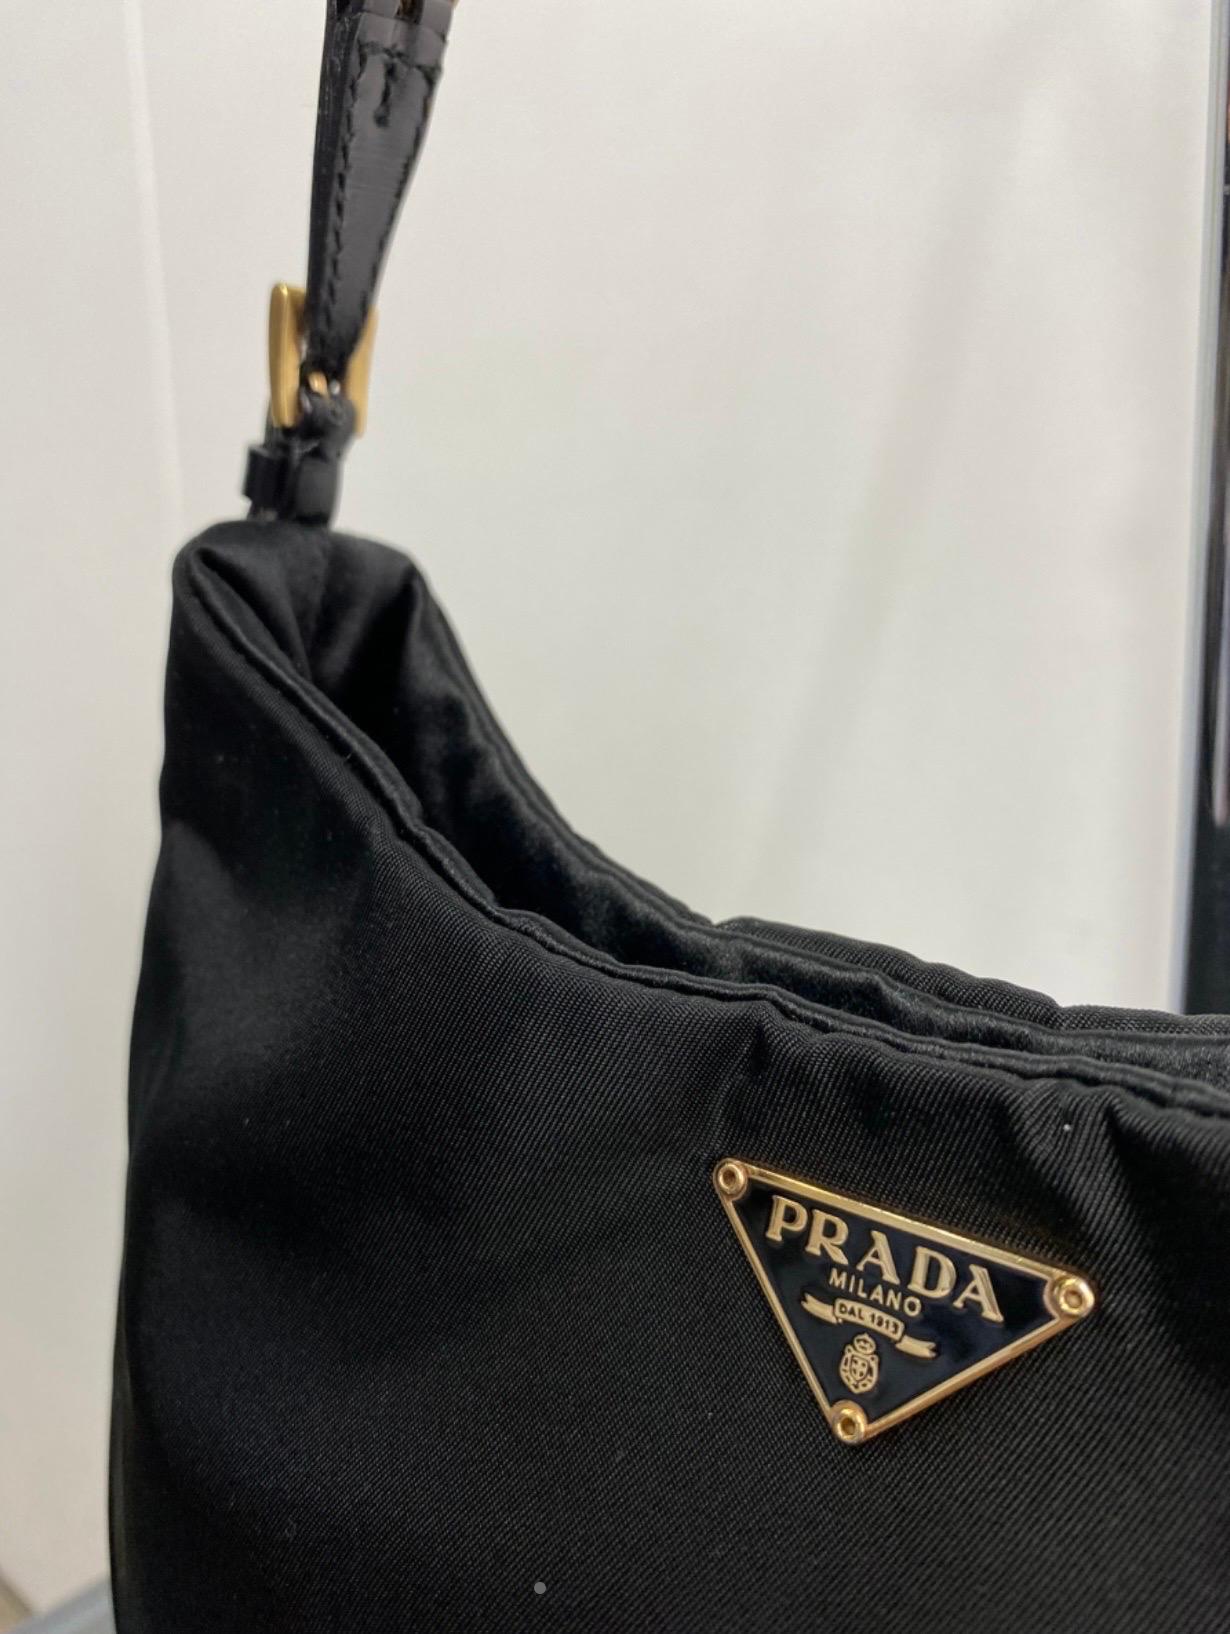 Prada Cleo vintage bag.
Both hand or shoulder bag.
In black iconic nylon. Golden chain shoulder strap. 
Measurements: 27X18X3 cm.
Excellent condition. It comes with original dust bag.